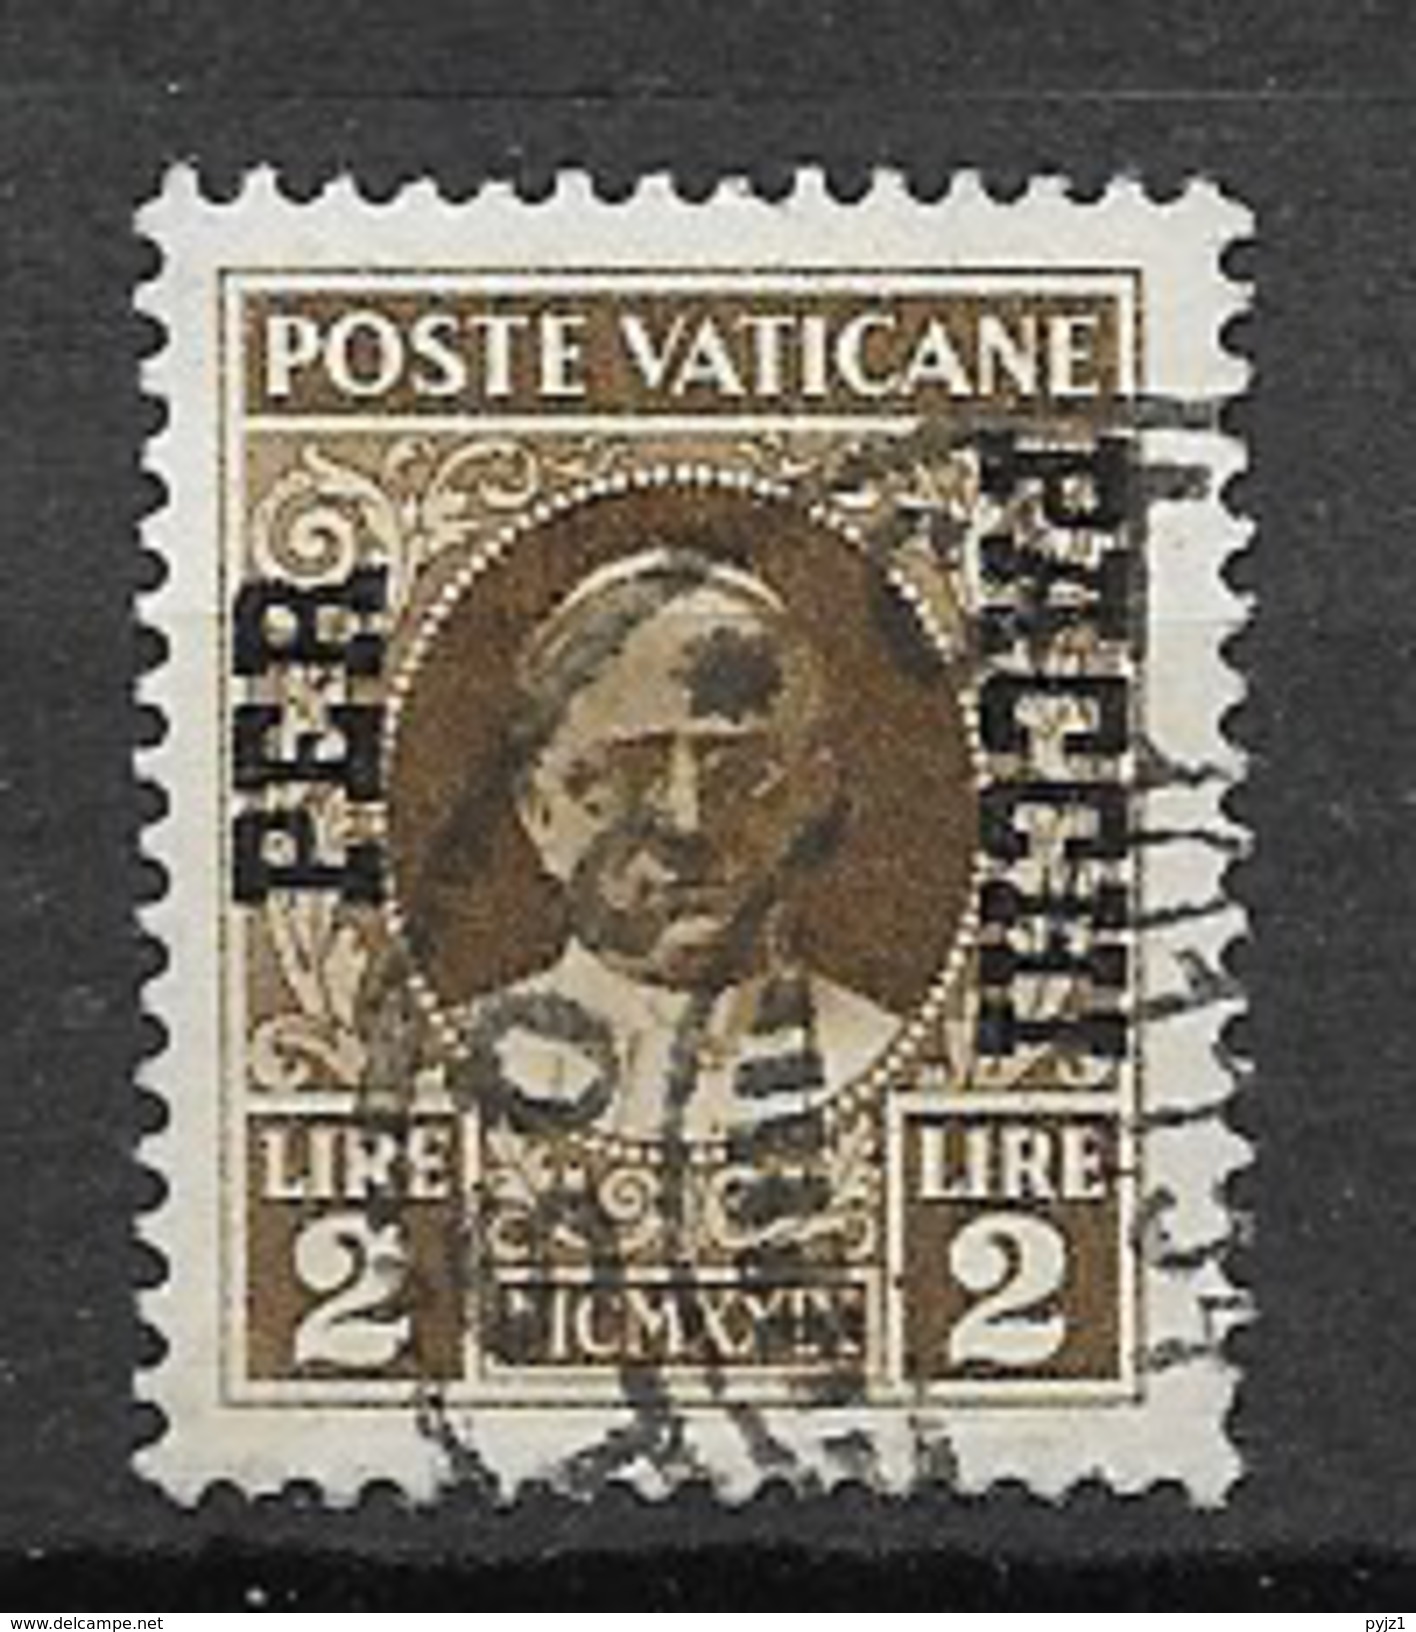 1931 USED Vaticano, Parcel - Parcel Post